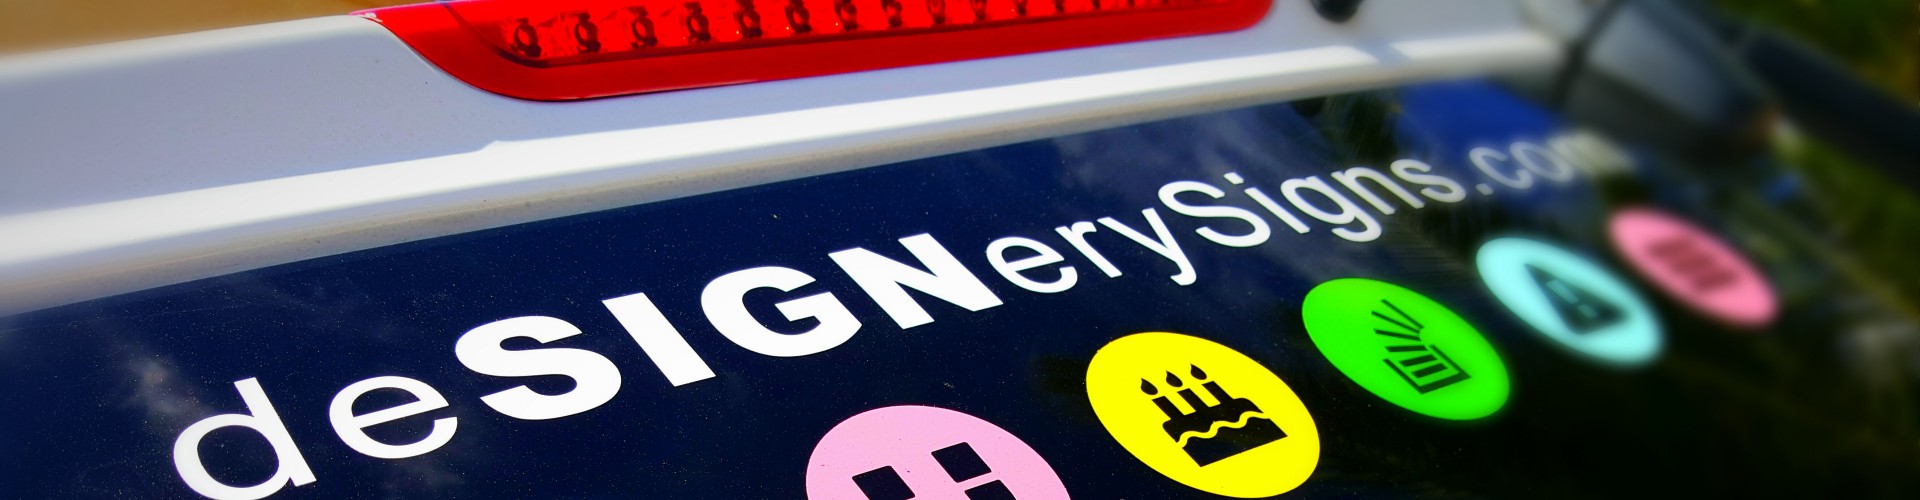 deSIGNery Signs | design & install department